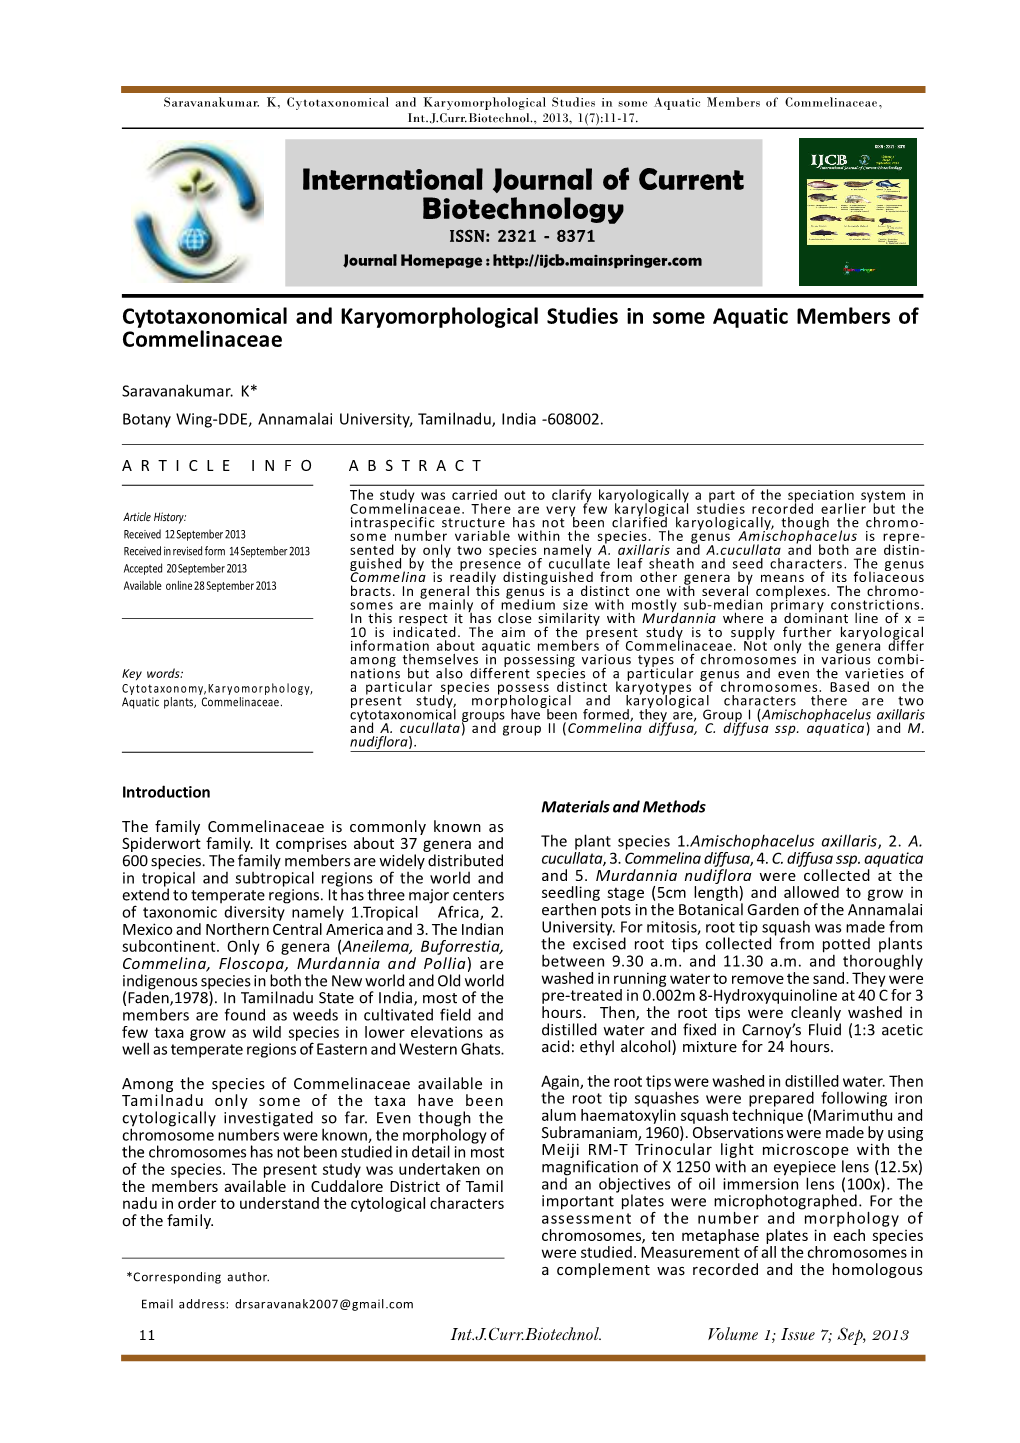 Cytotaxonomical and Karyomorphological Studies in Some Aquatic Members of Commelinaceae, Int.J.Curr.Biotechnol., 2013, 1(7):11-17